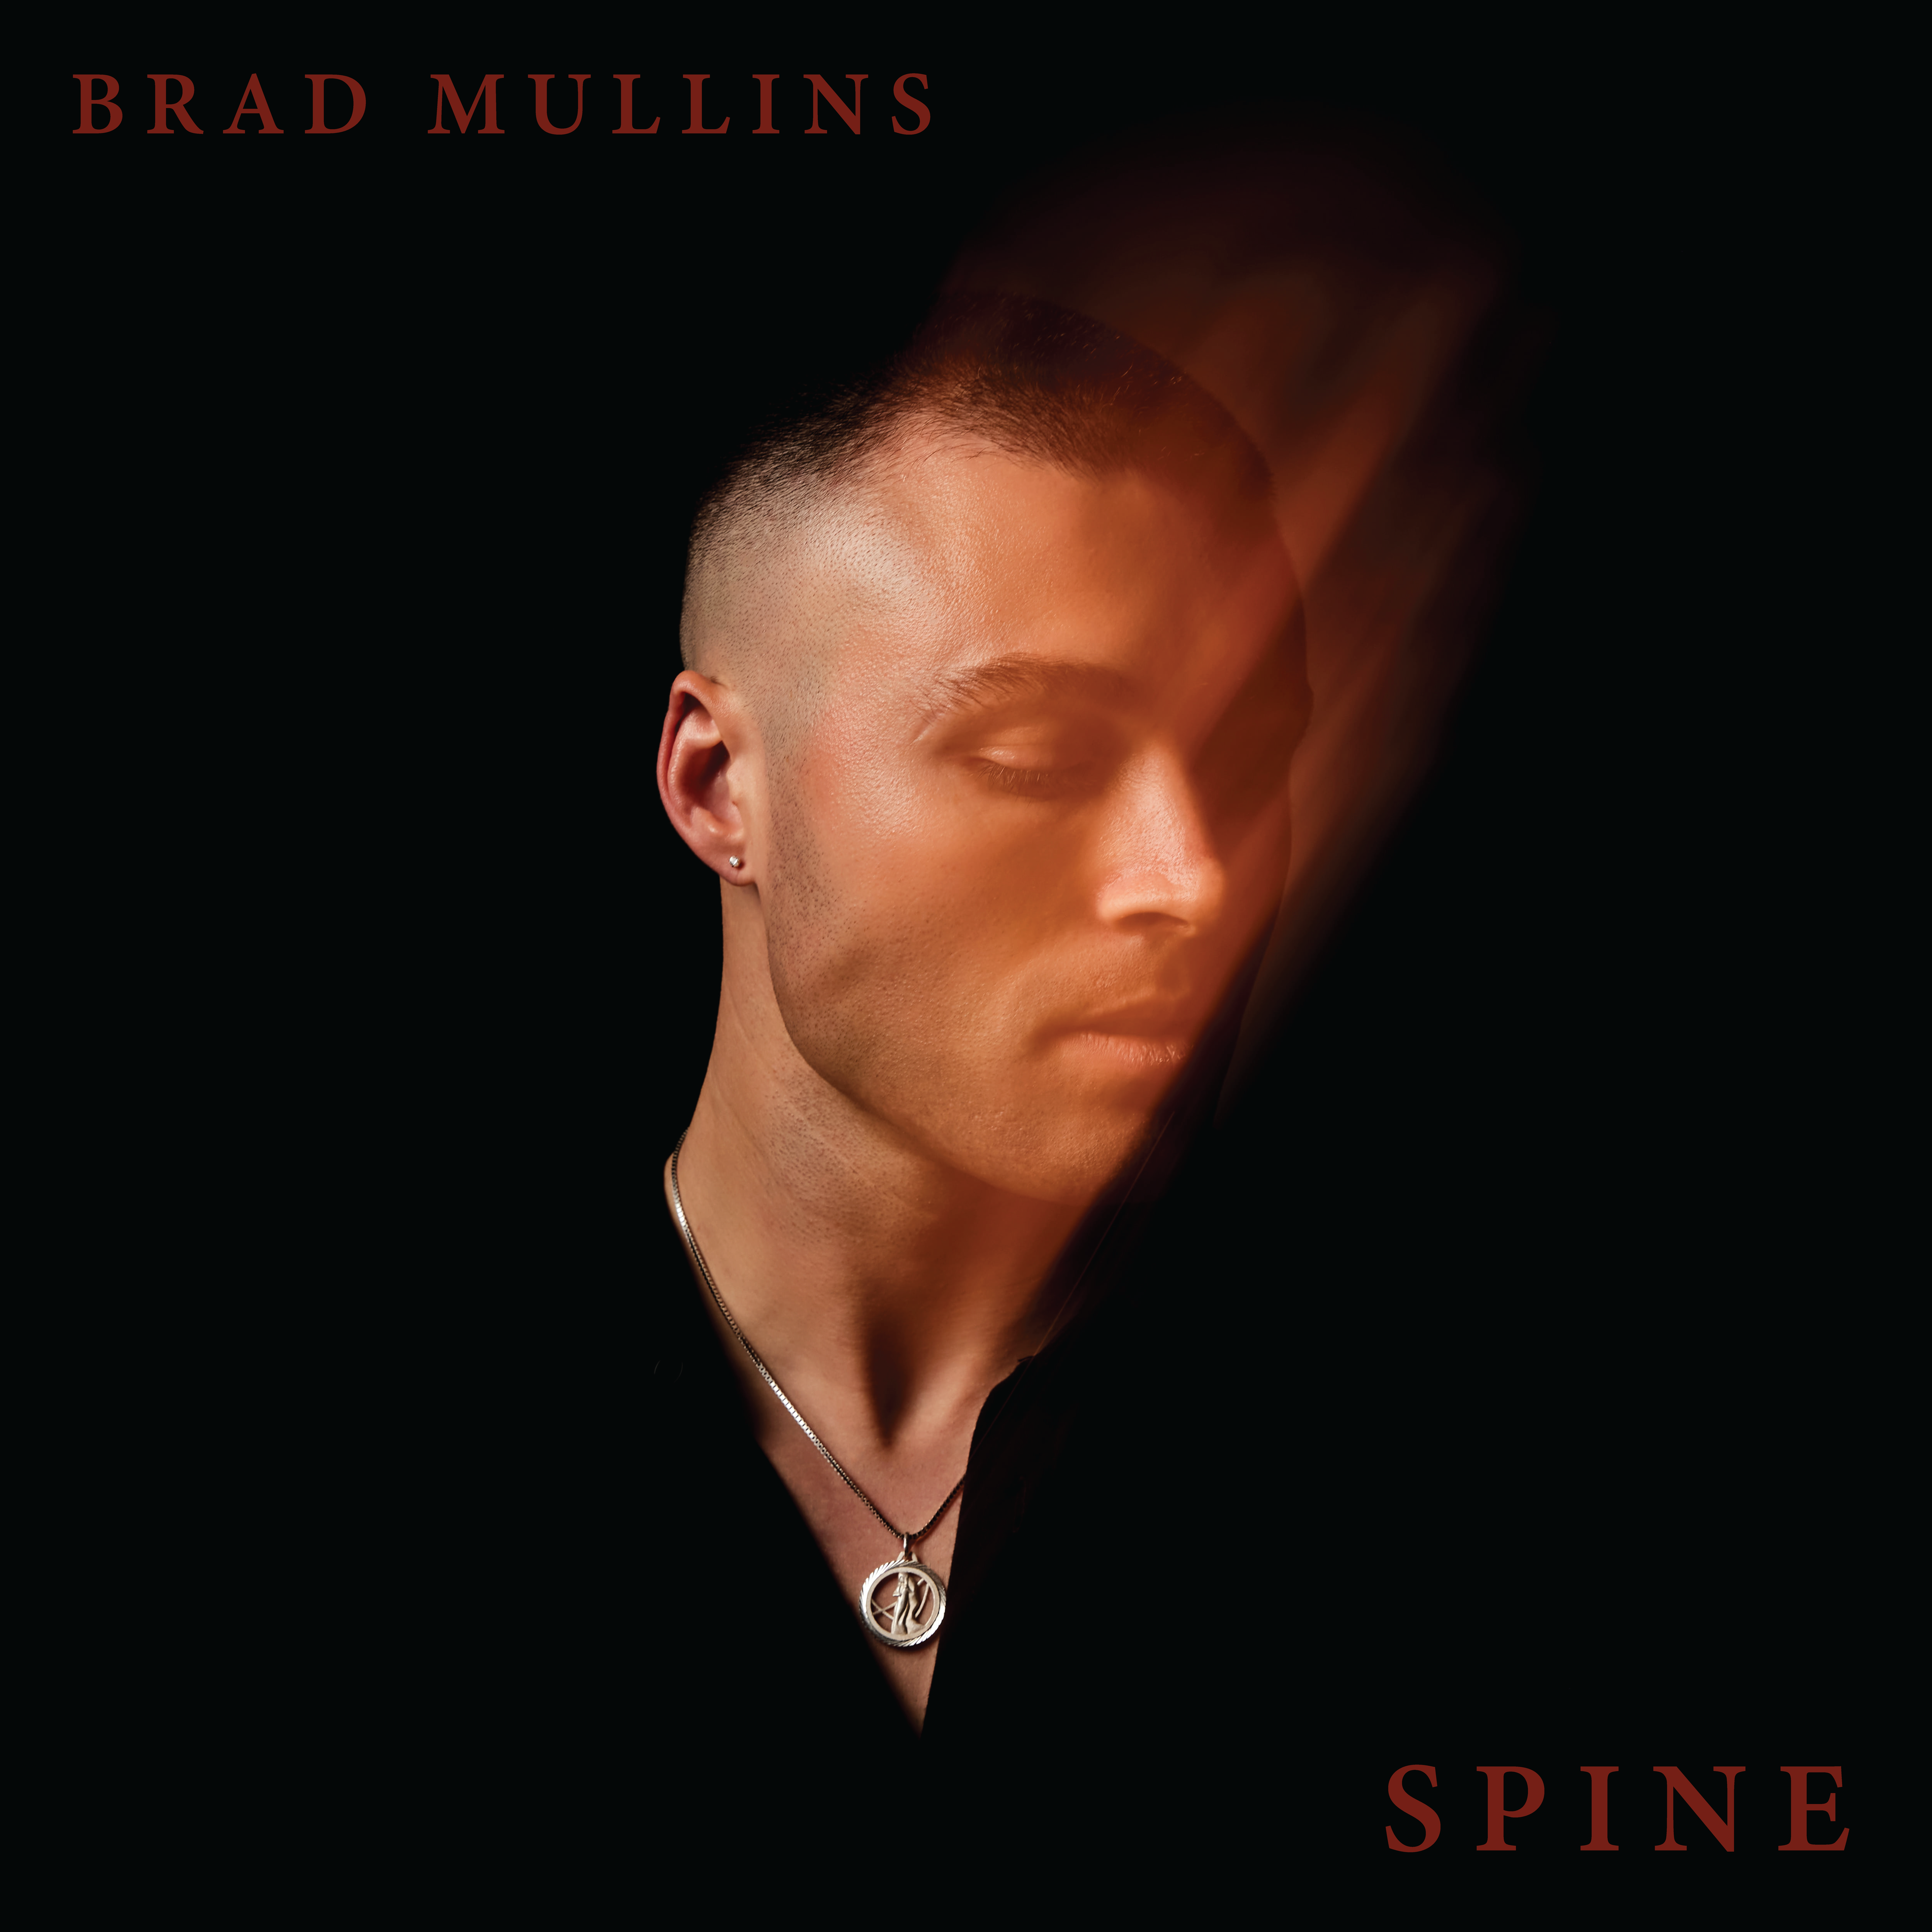 Artwork for track: Spine by Brad Mullins